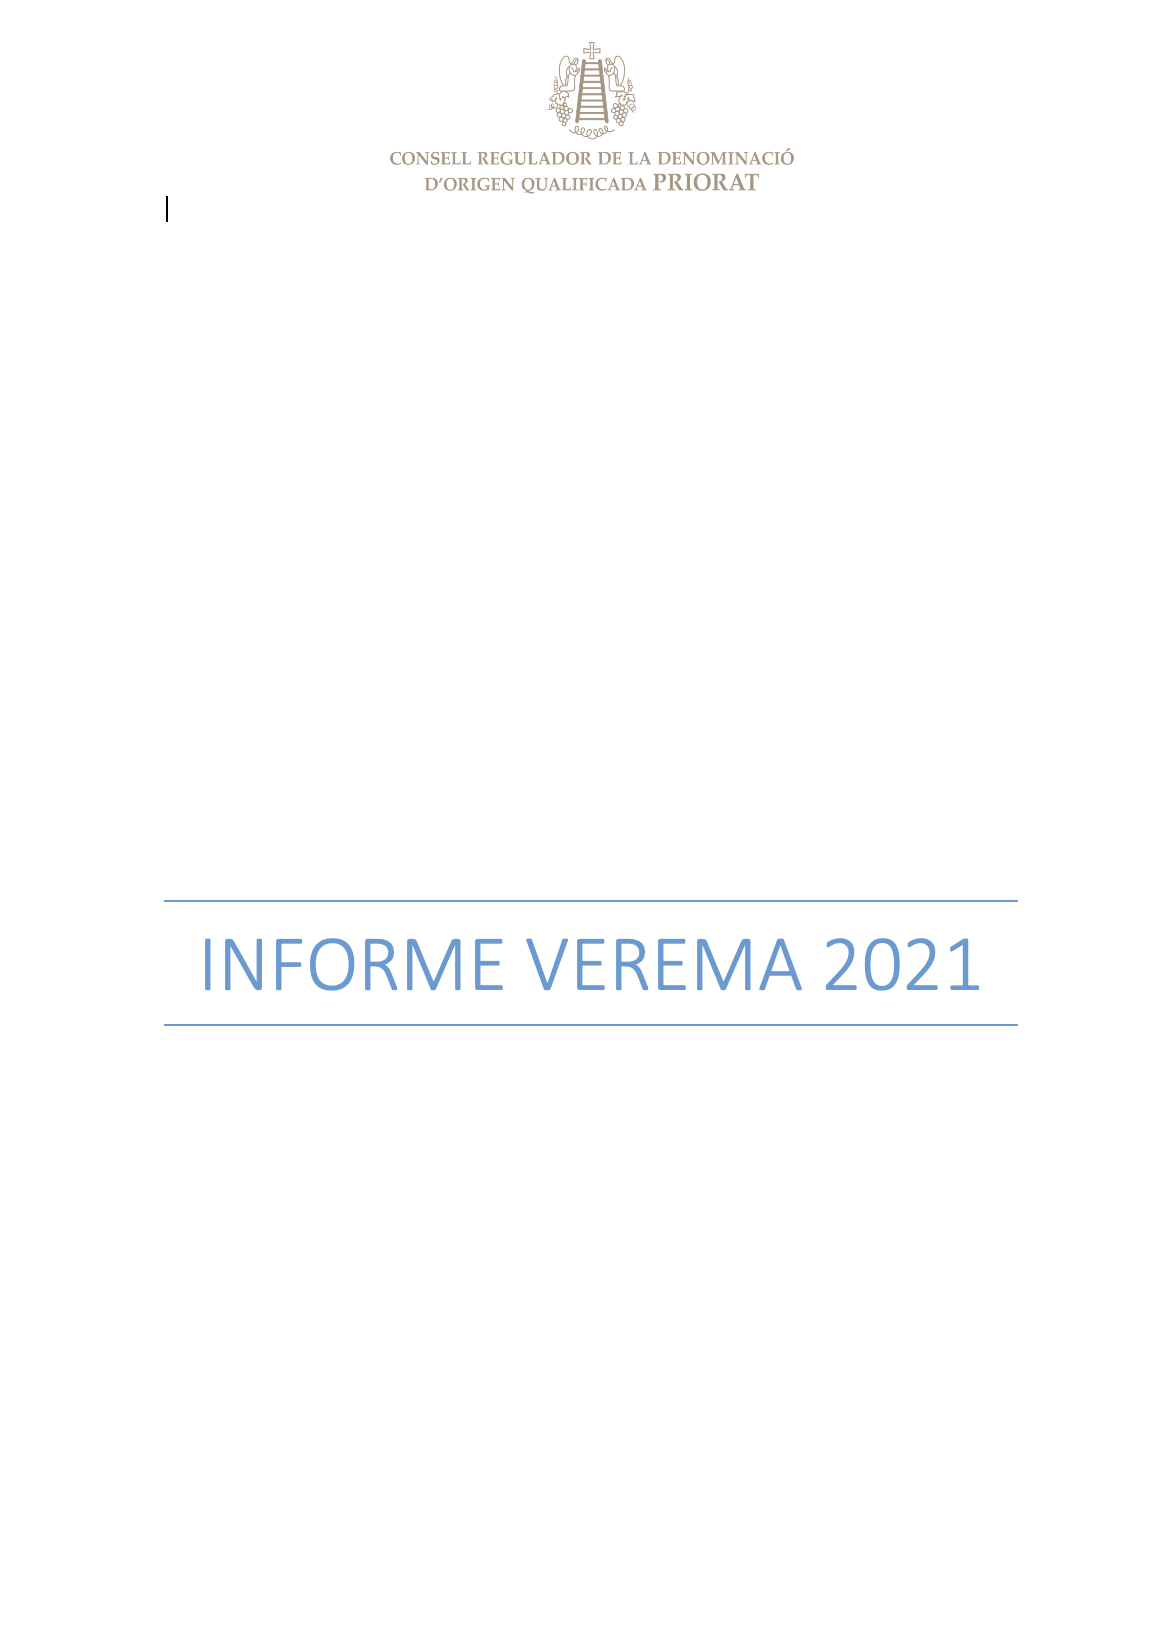 Informe de verema 2021